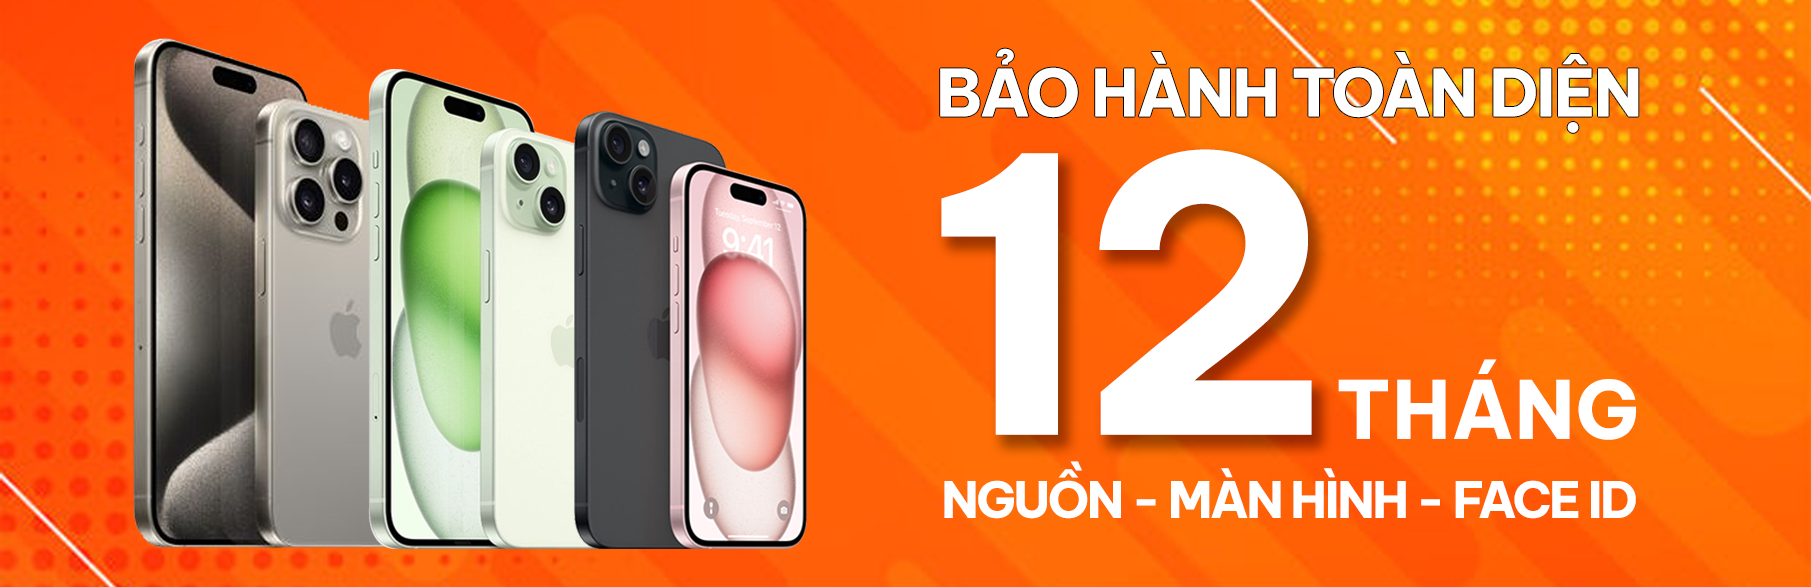 iphone bao hanh 12 thang